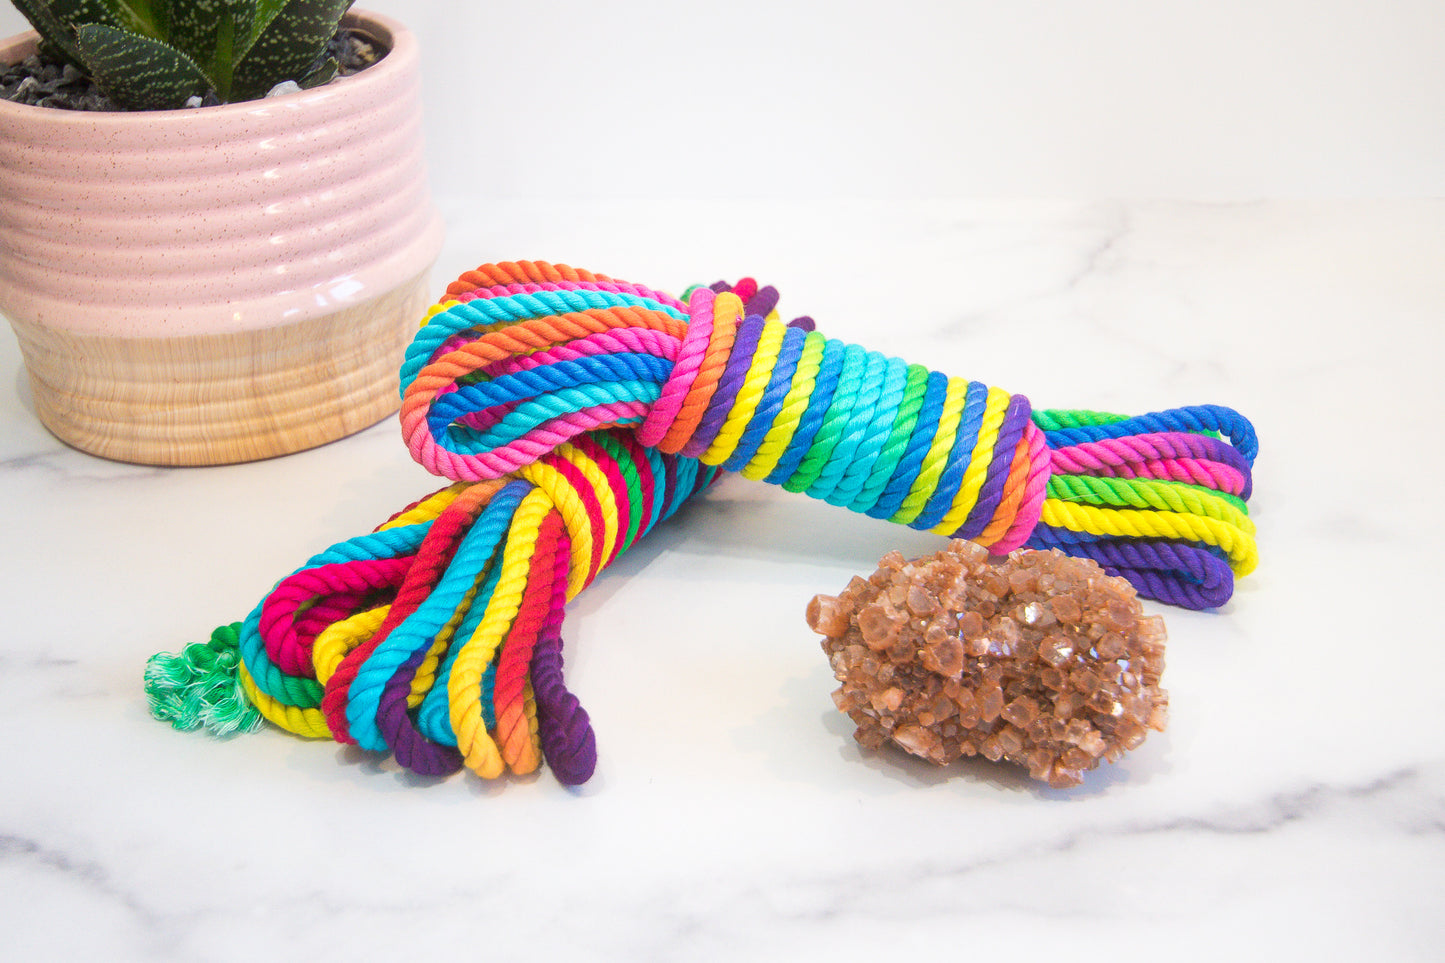 Unicorn Bondage Silk Rope  Self-Pleasure Toys – happypinktaco